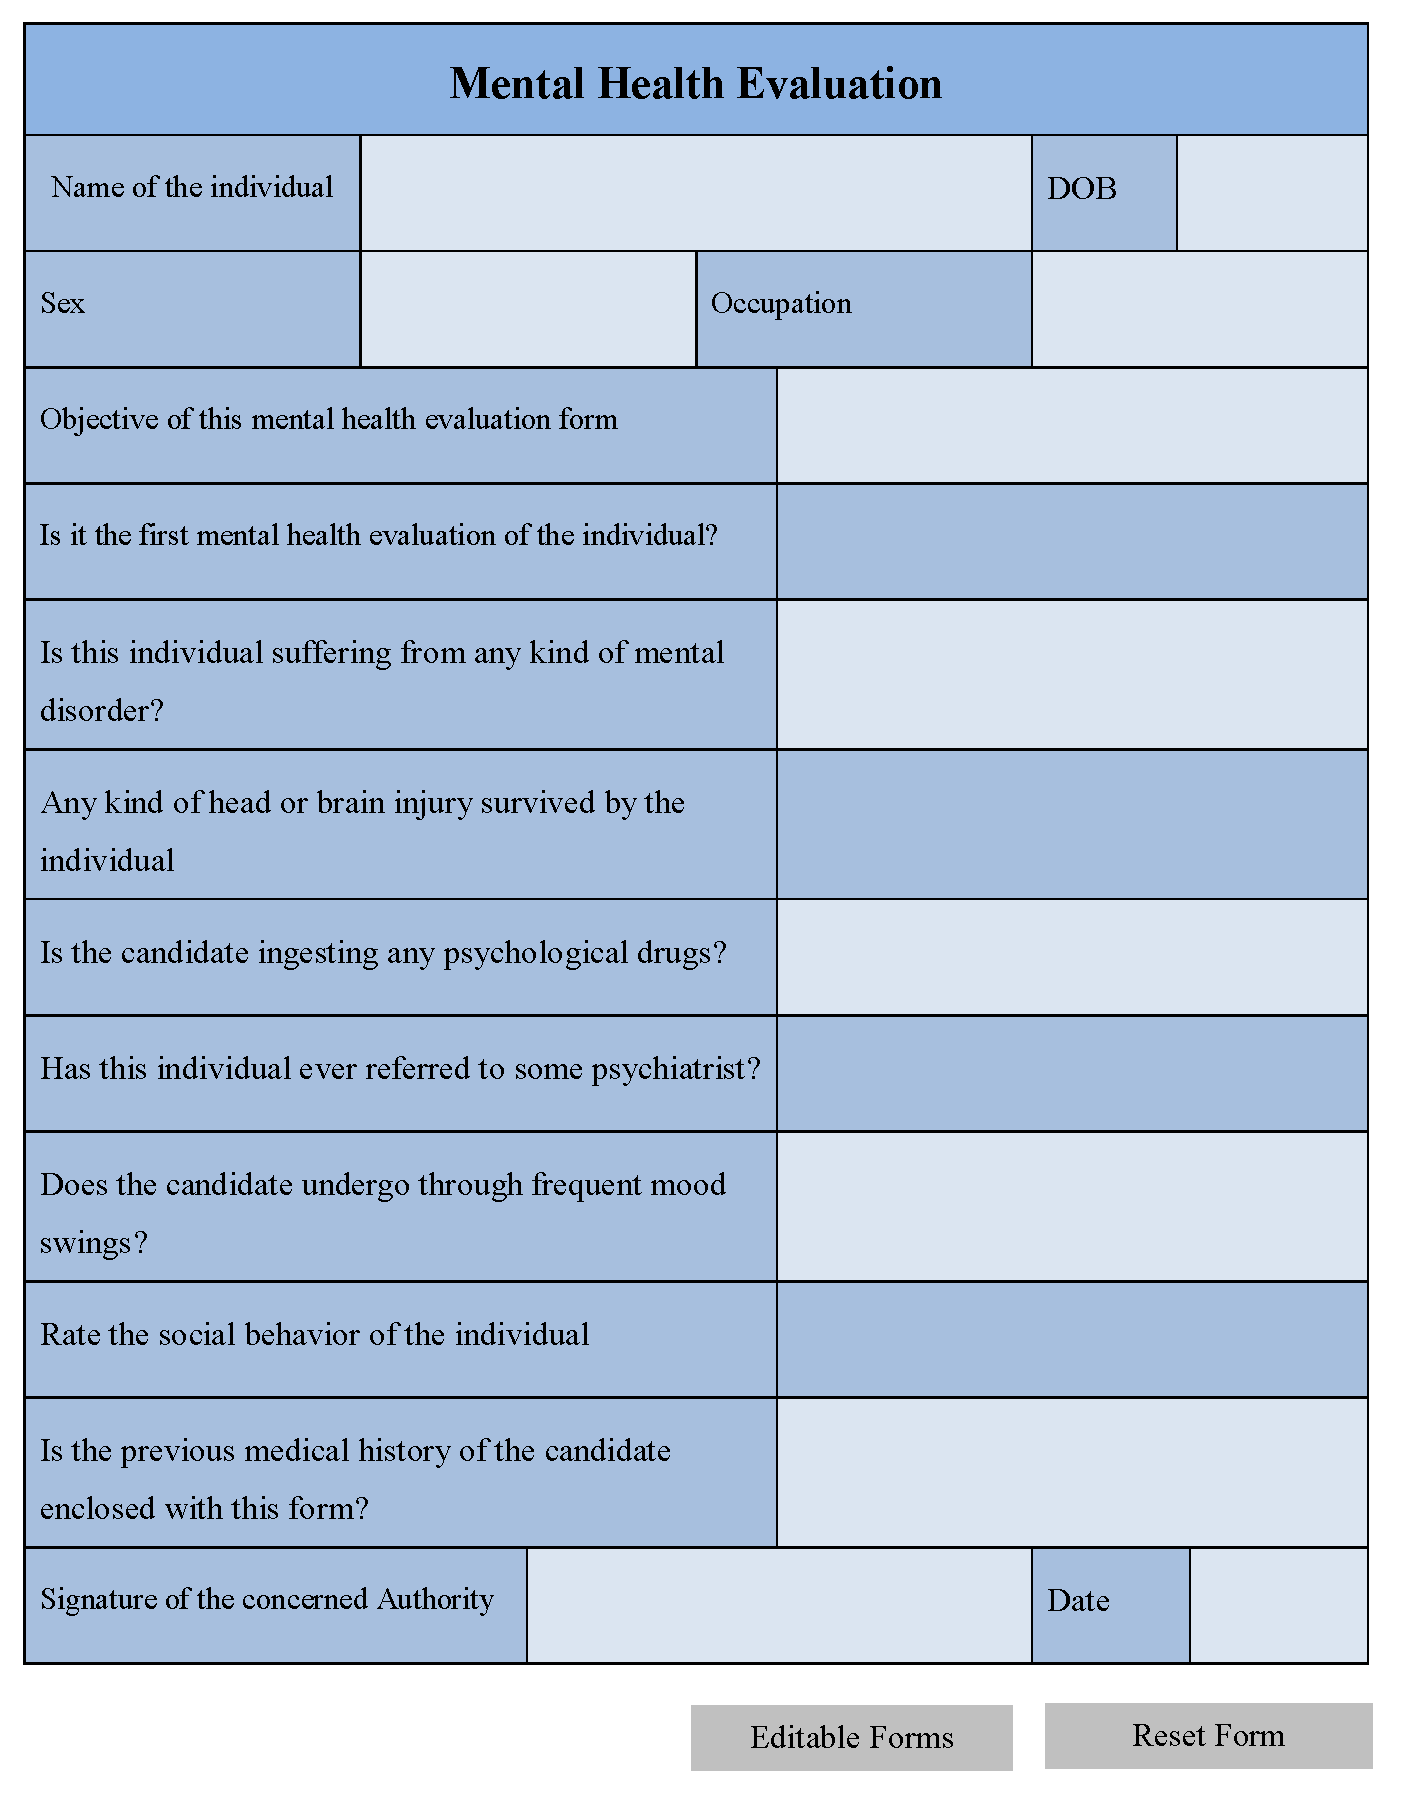 Mental Health Evaluation Form Editable PDF Forms